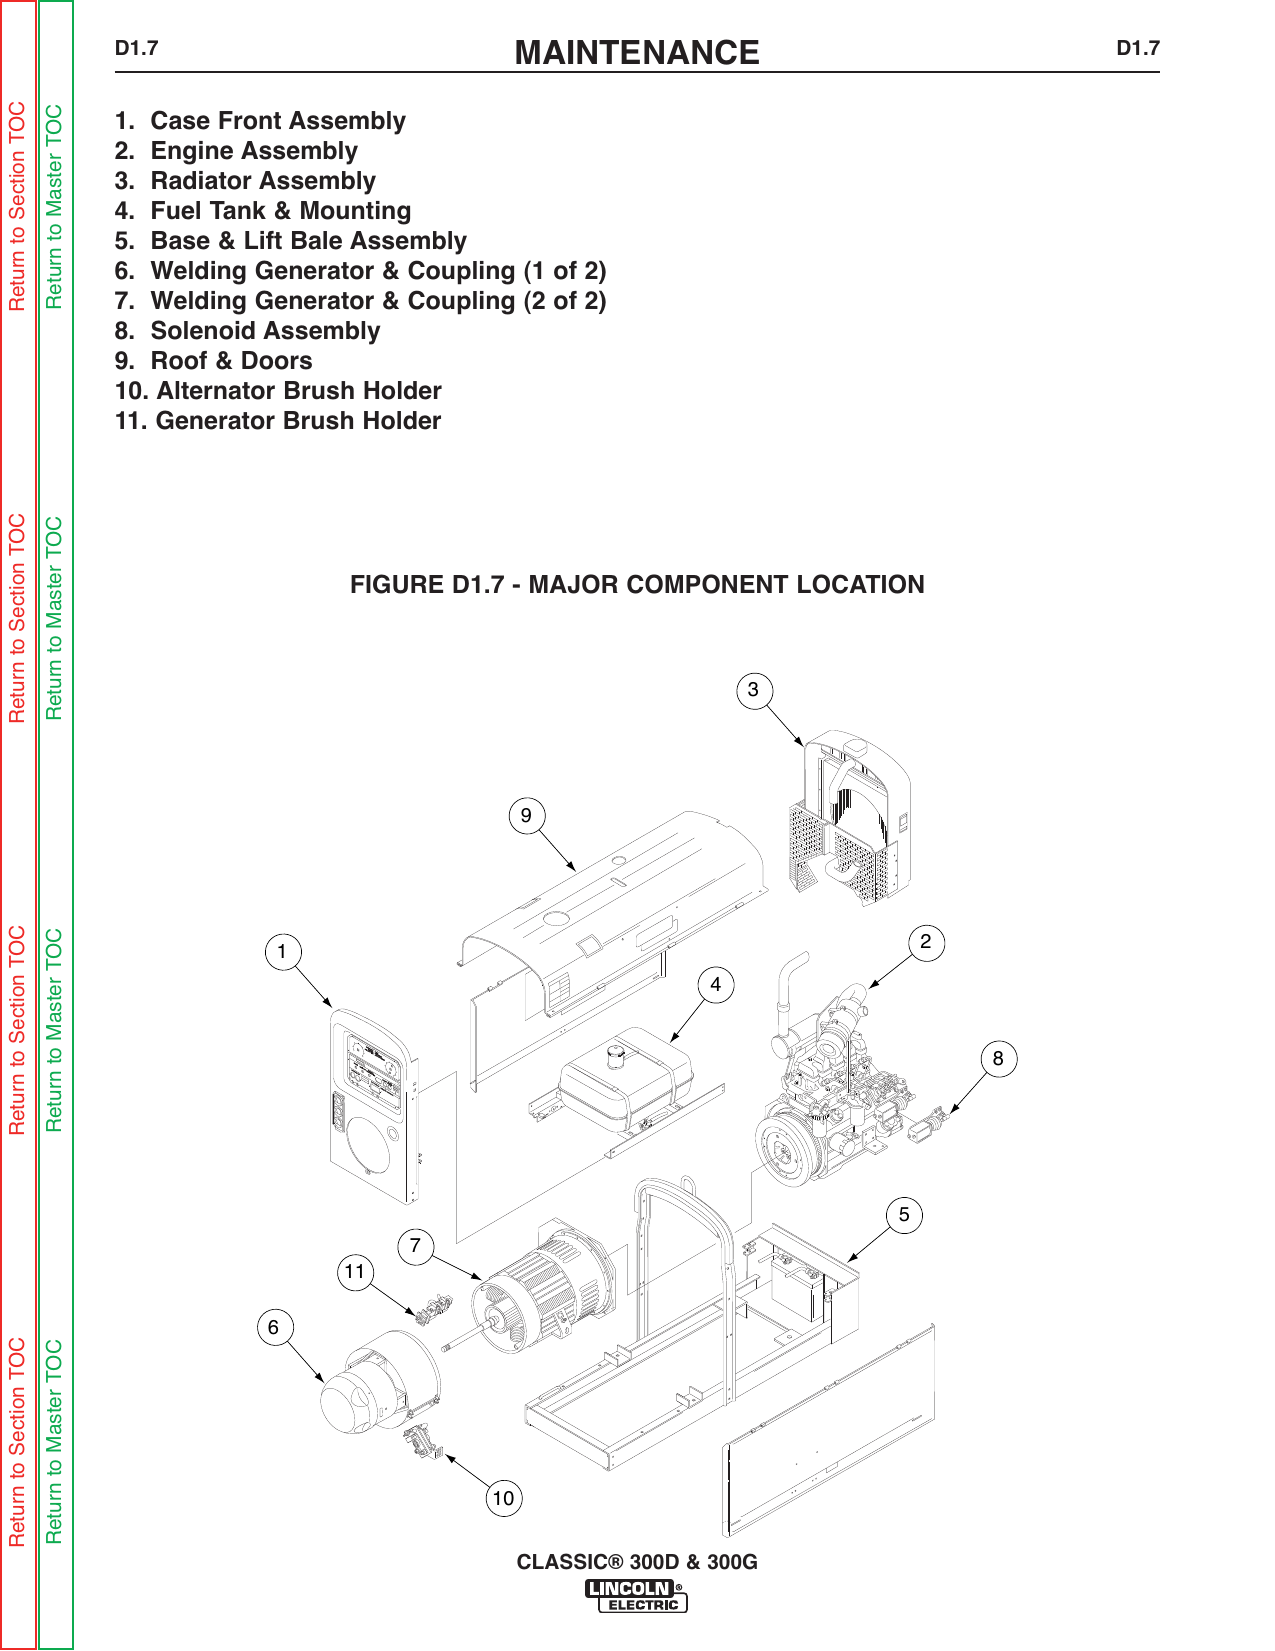 Lincoln Classic 300d Remote Control Wiring Diagram - Wiring Diagram Schemas